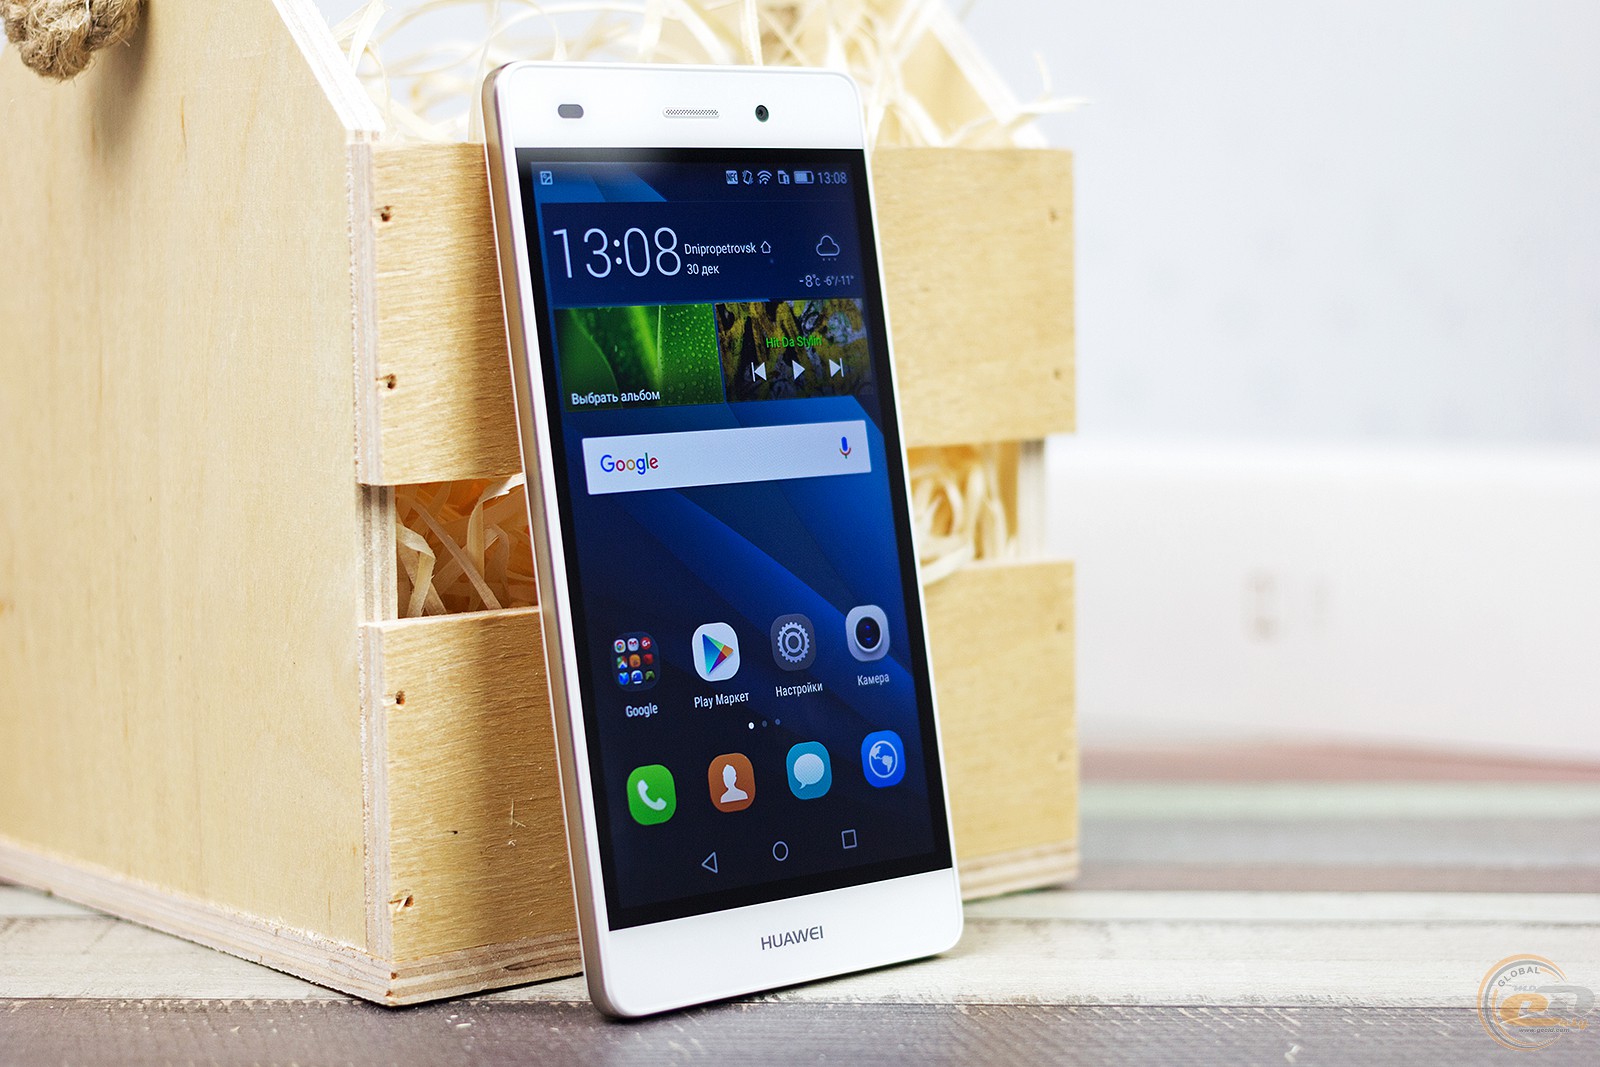 Huawei rinnova il suo smartphone P8 Lite - Wired